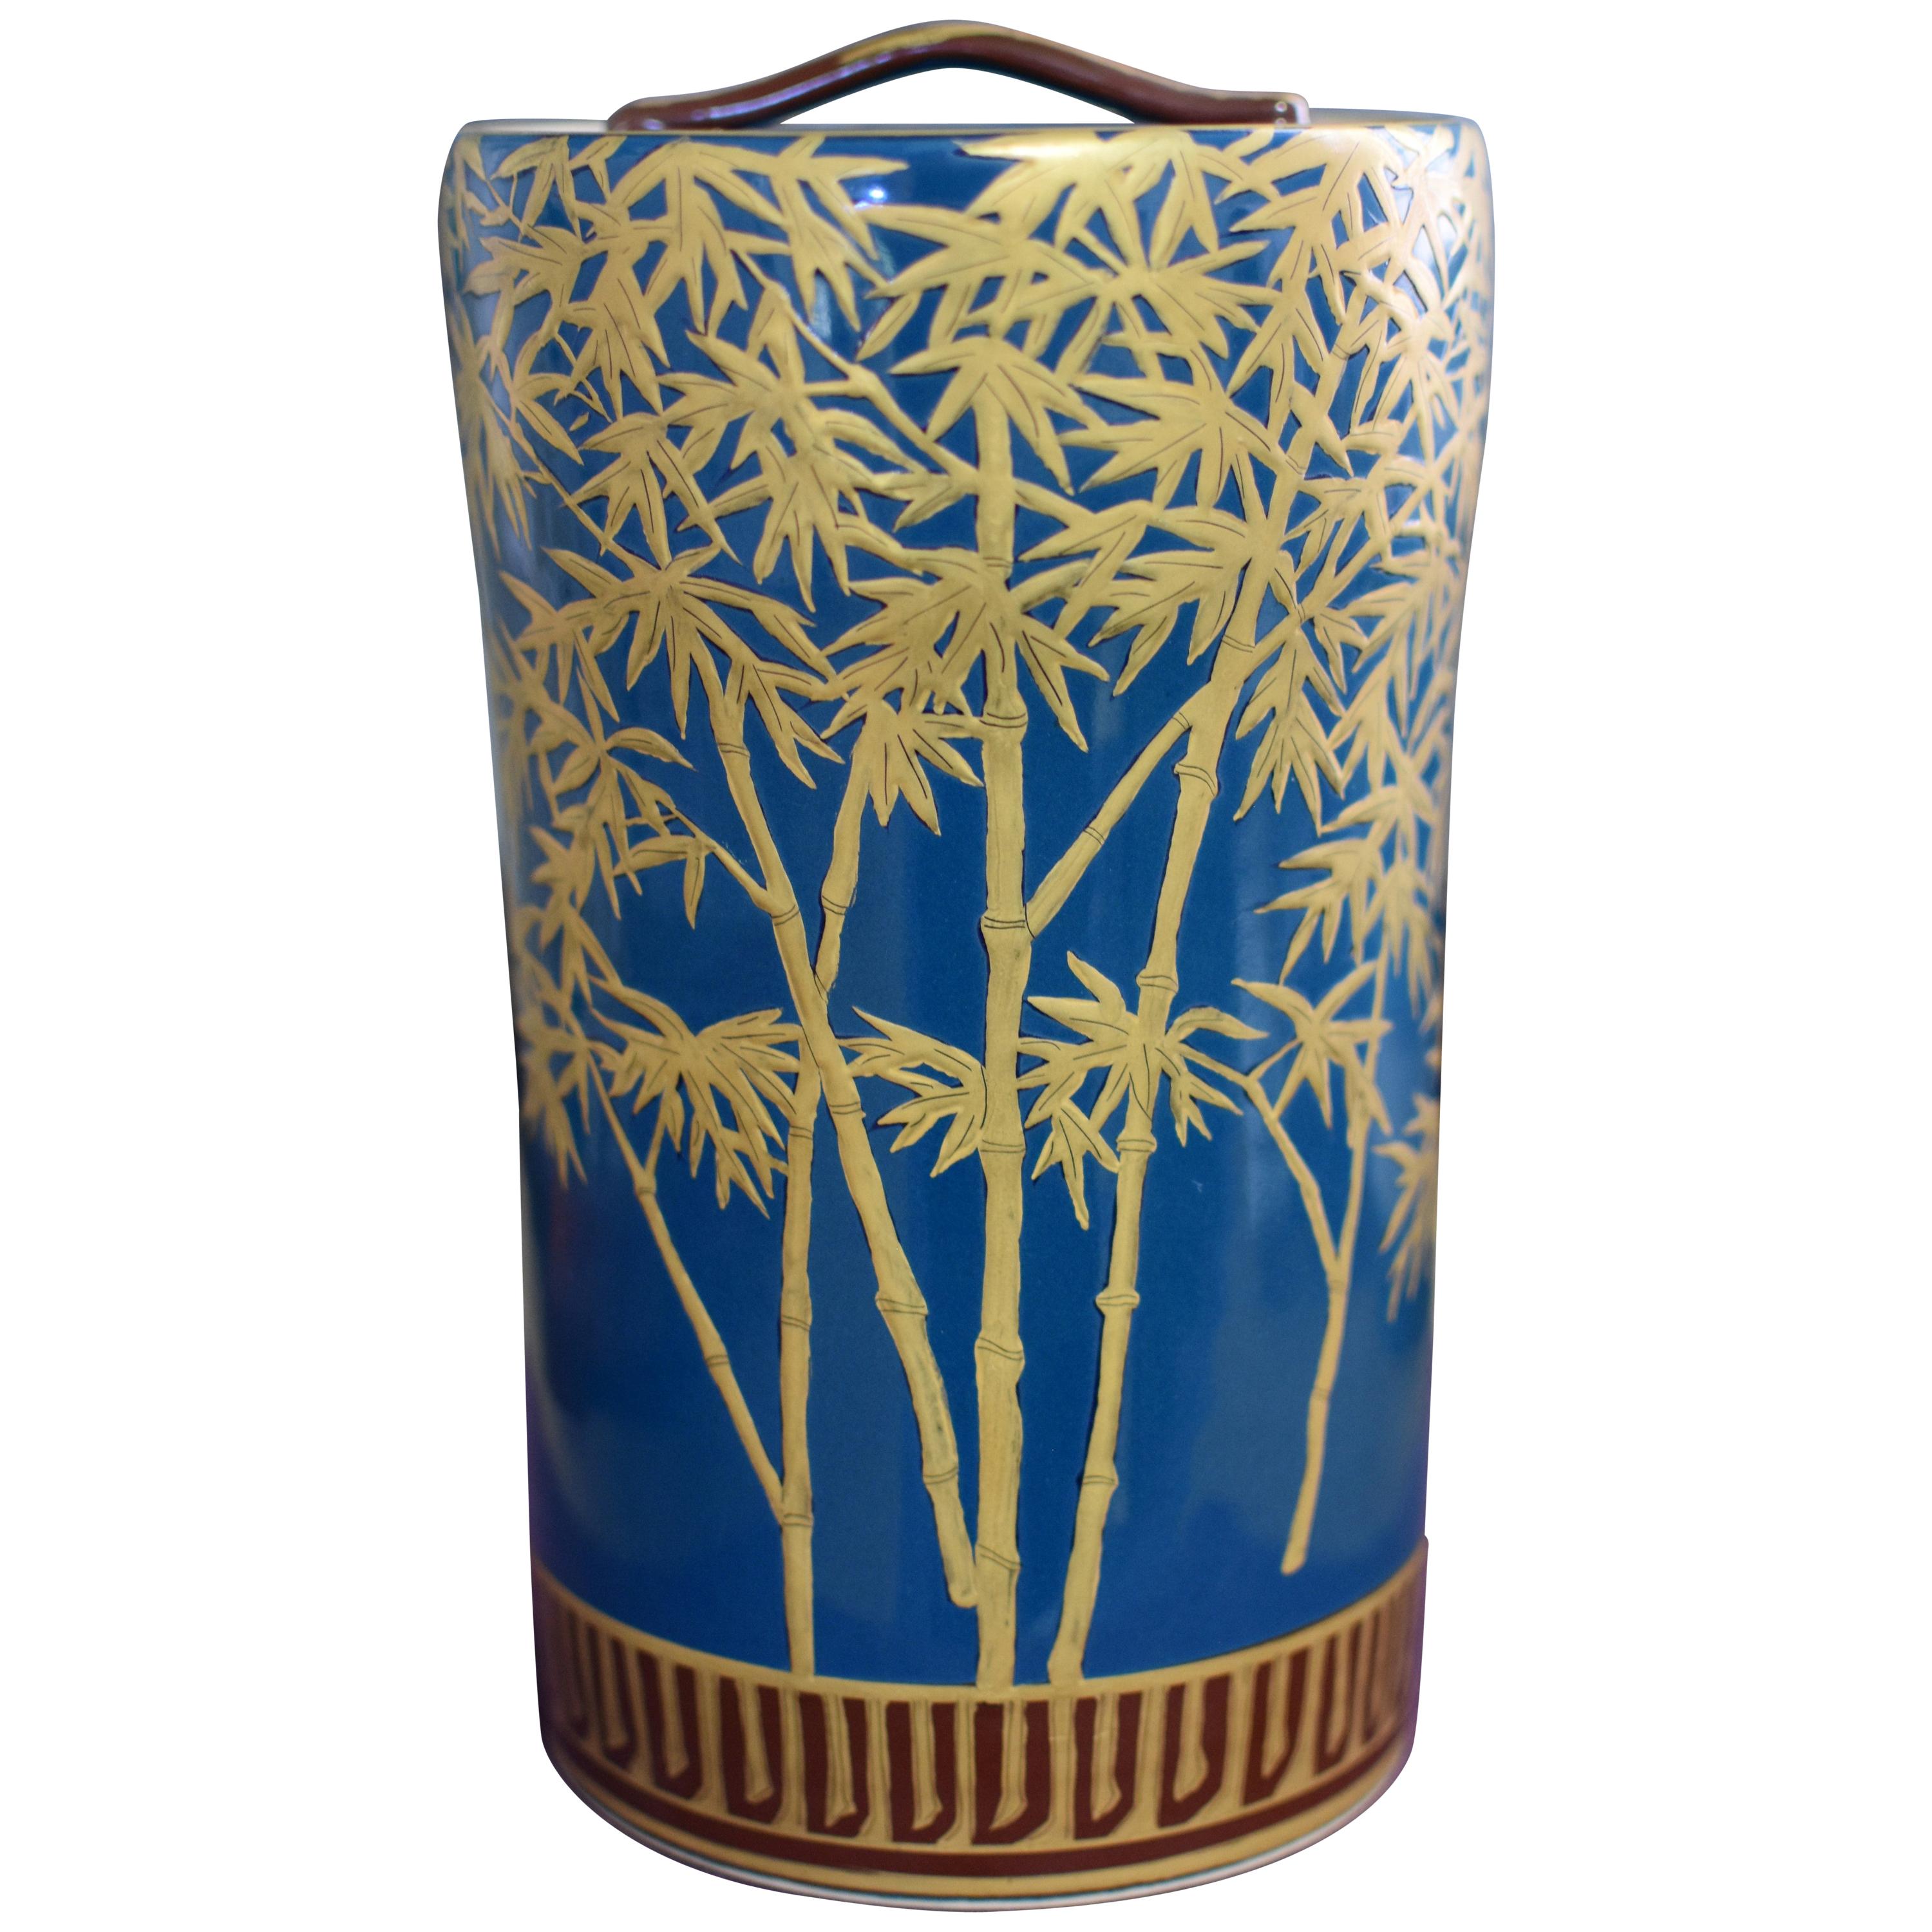 Japanese Blue Gold Mizusashi Water Jar by Master Contemporary Porcelain Artist